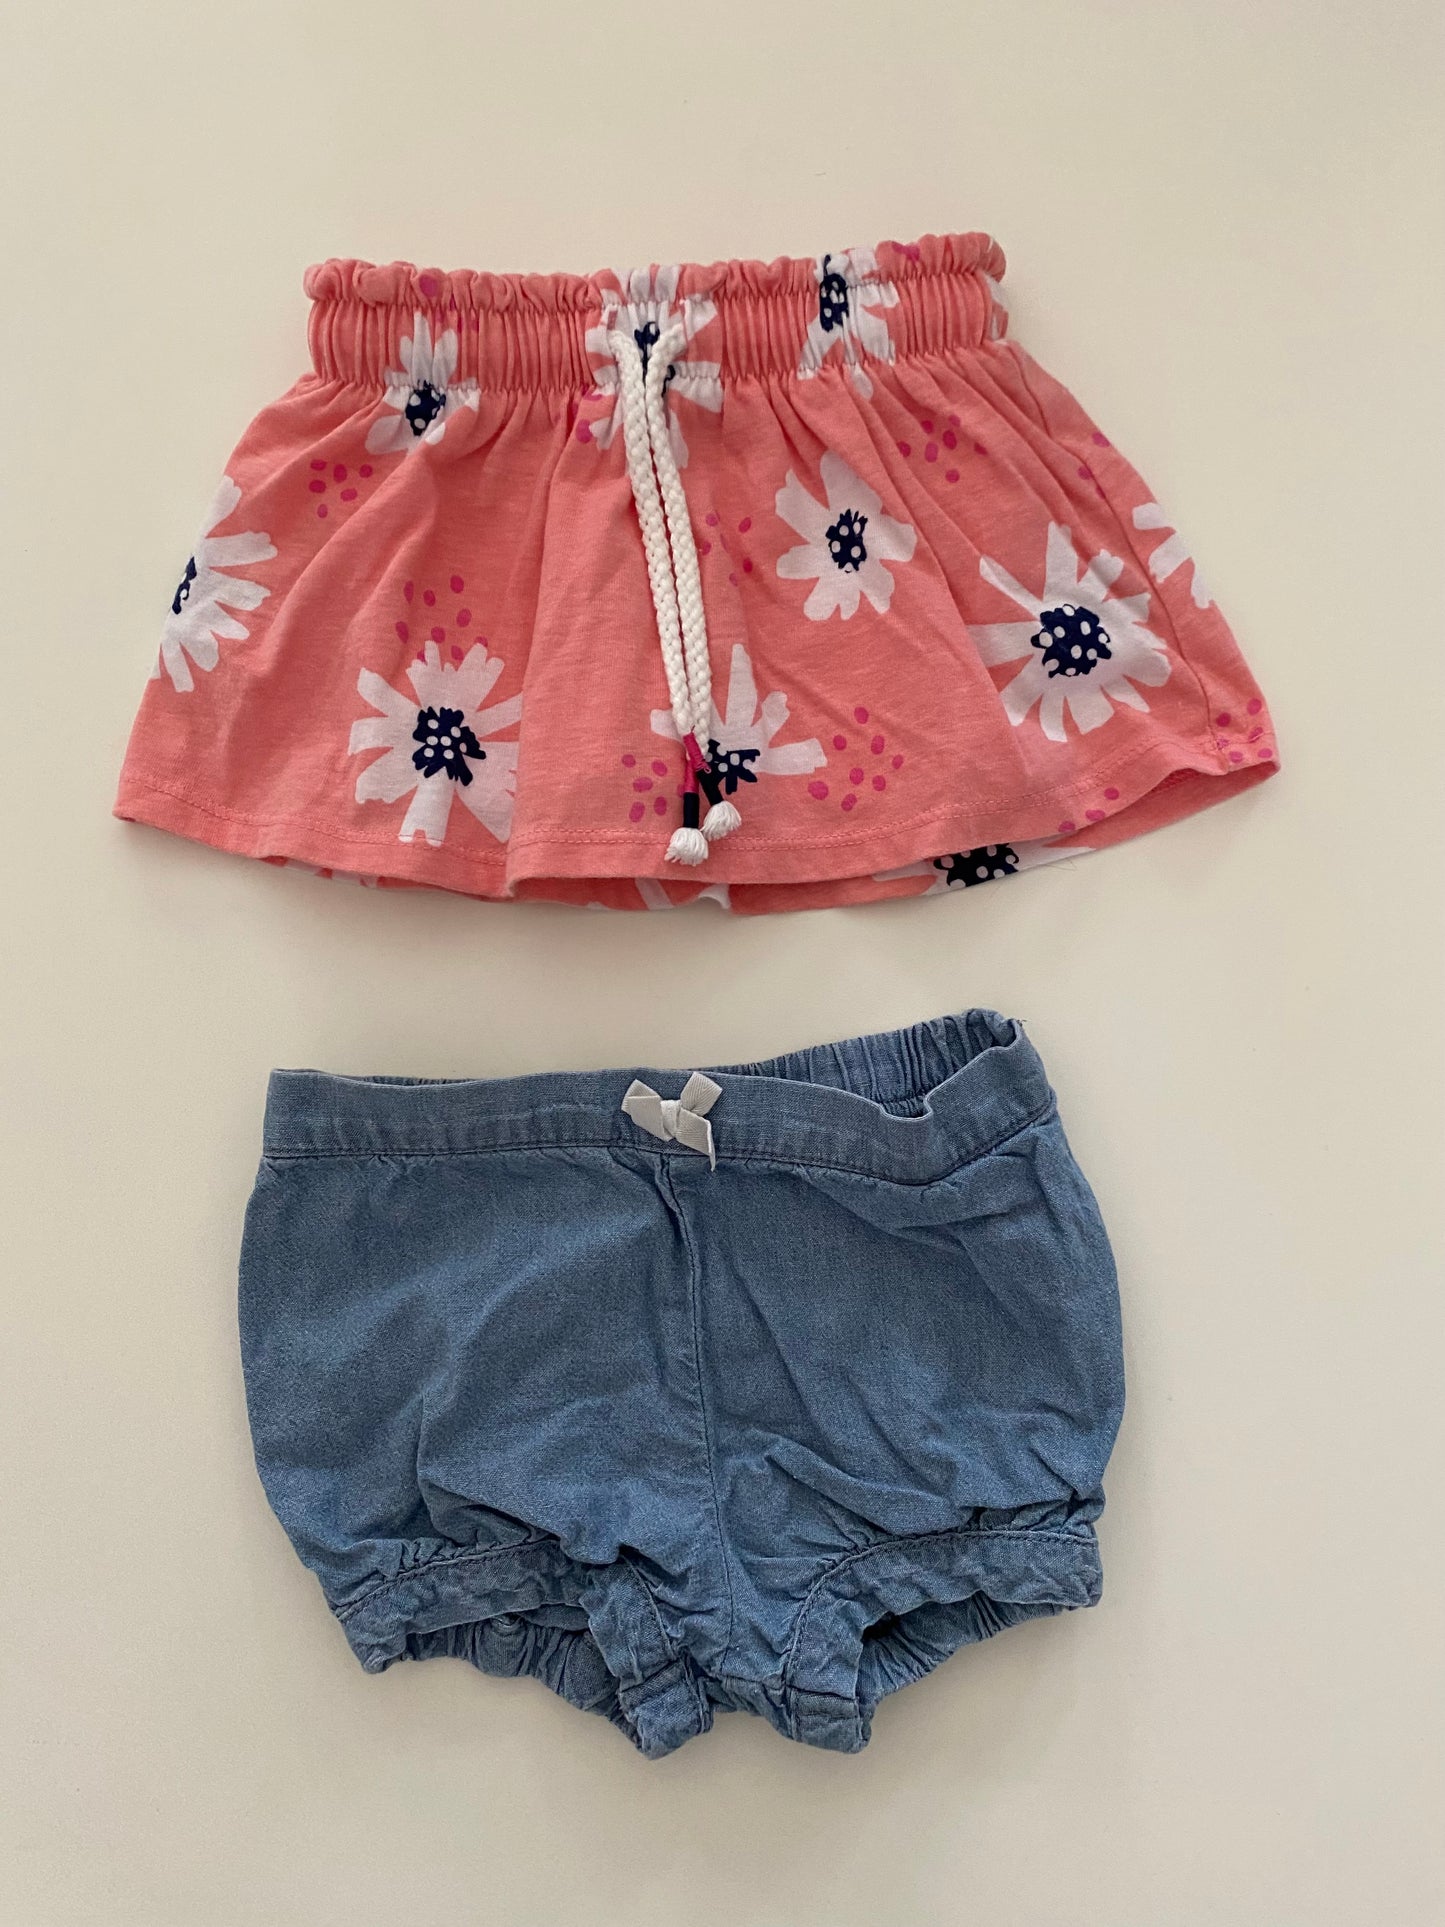 Cat & Jack pink floral skort and Carter’s blue Jean bubble shorts Girls 18 M